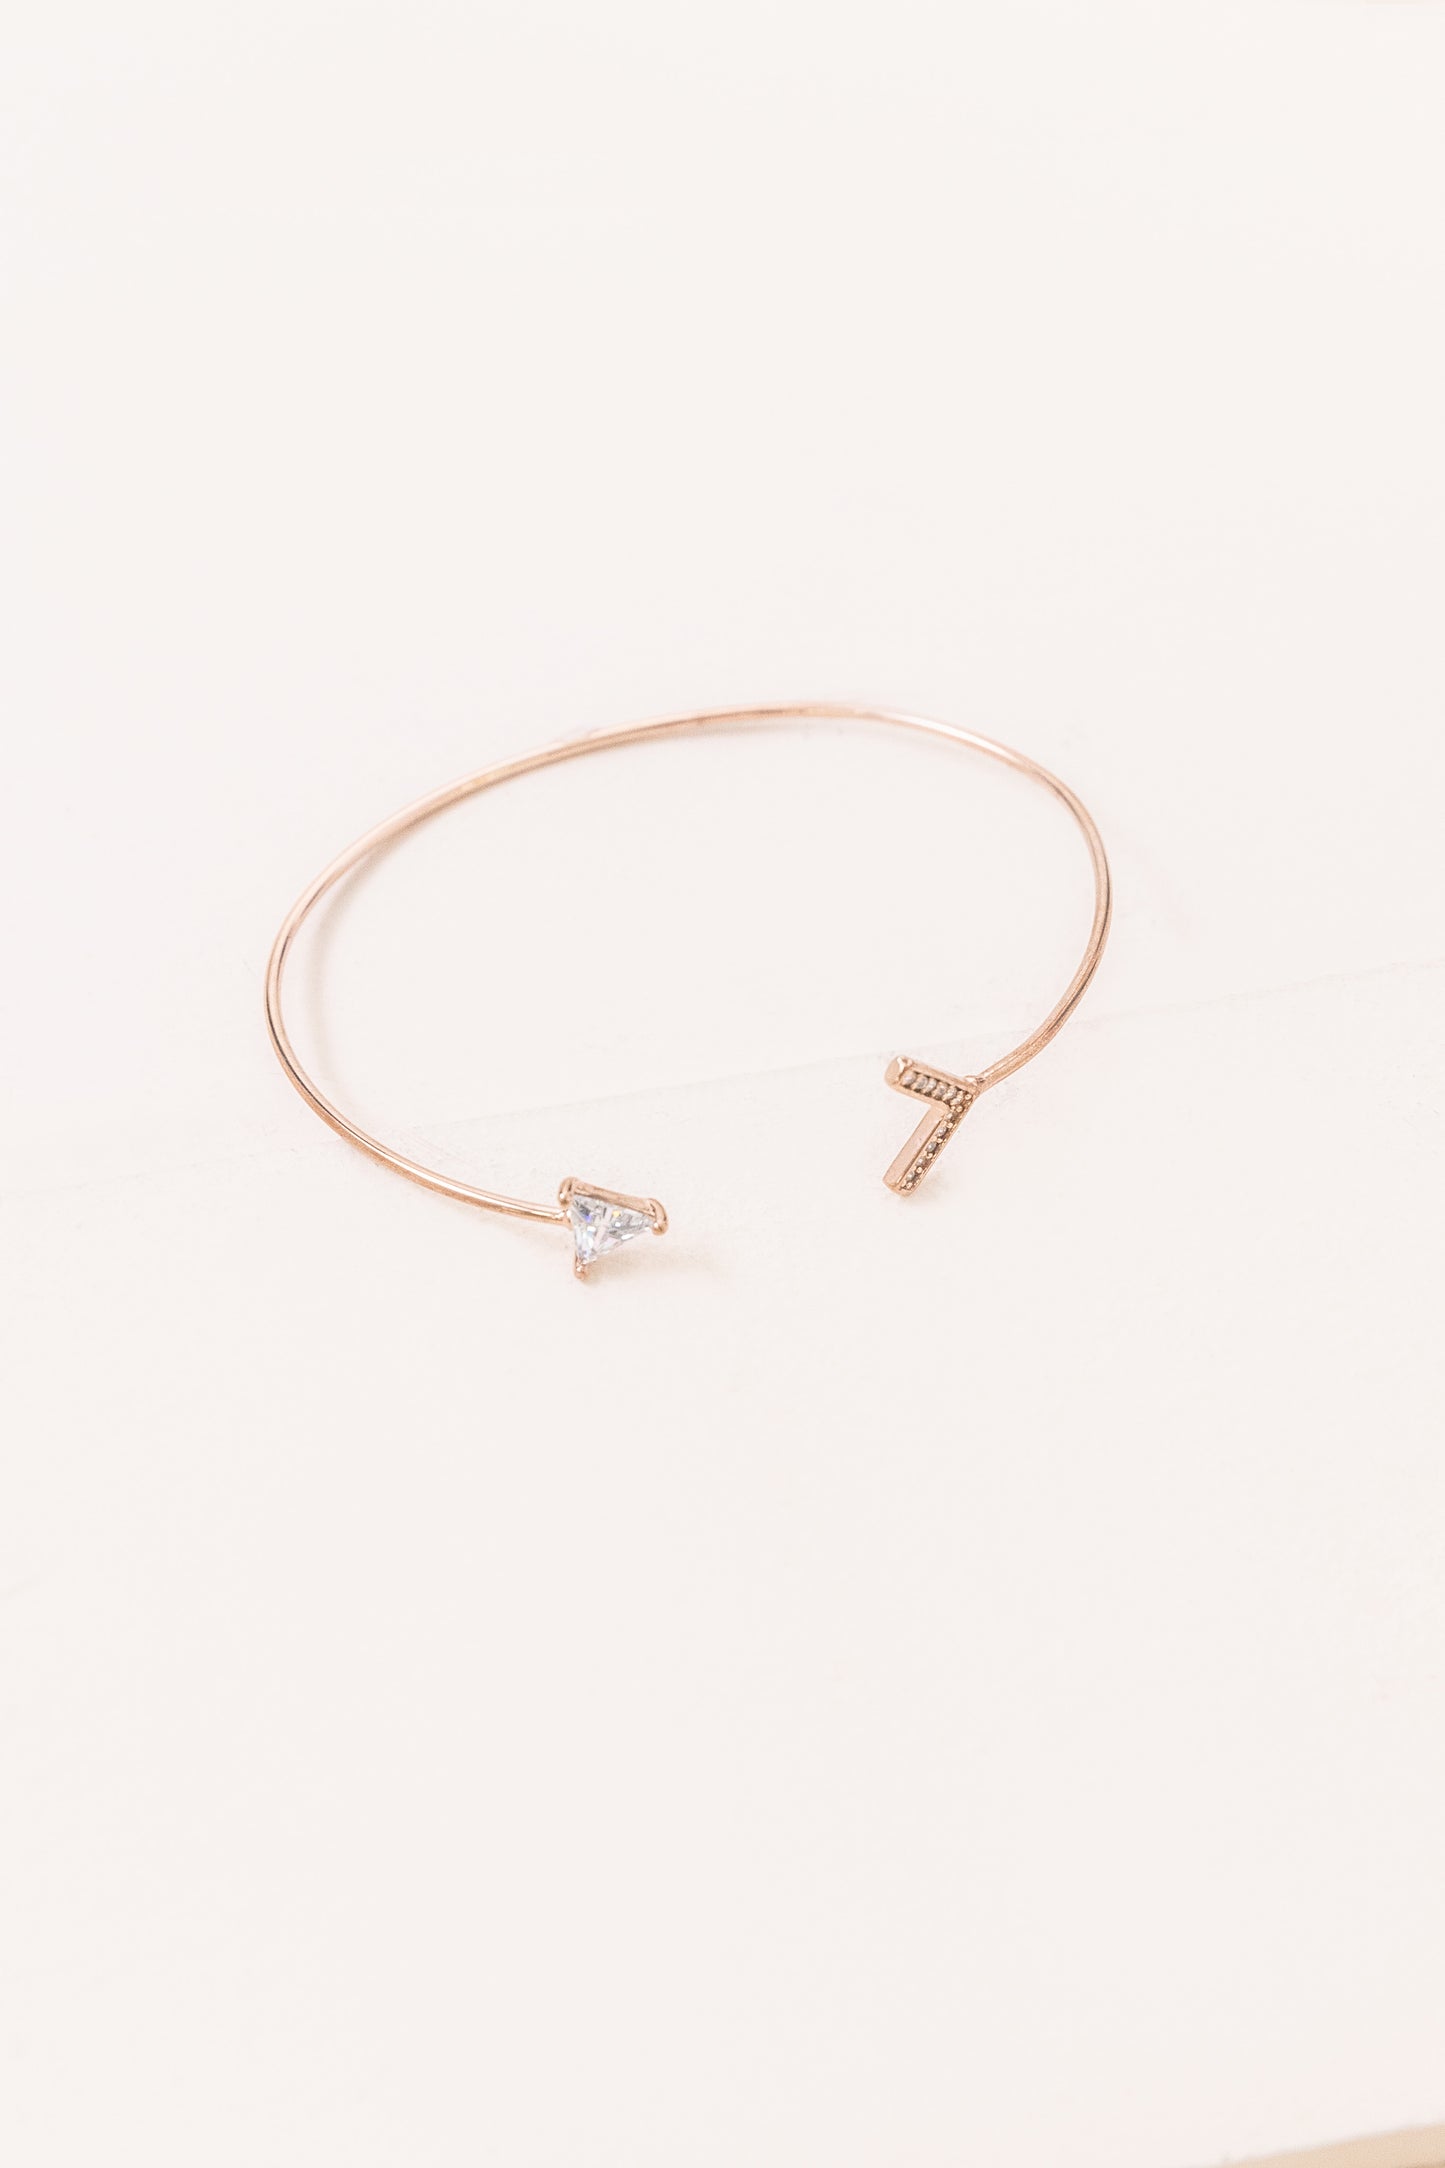 Arrow Cuff Bracelet